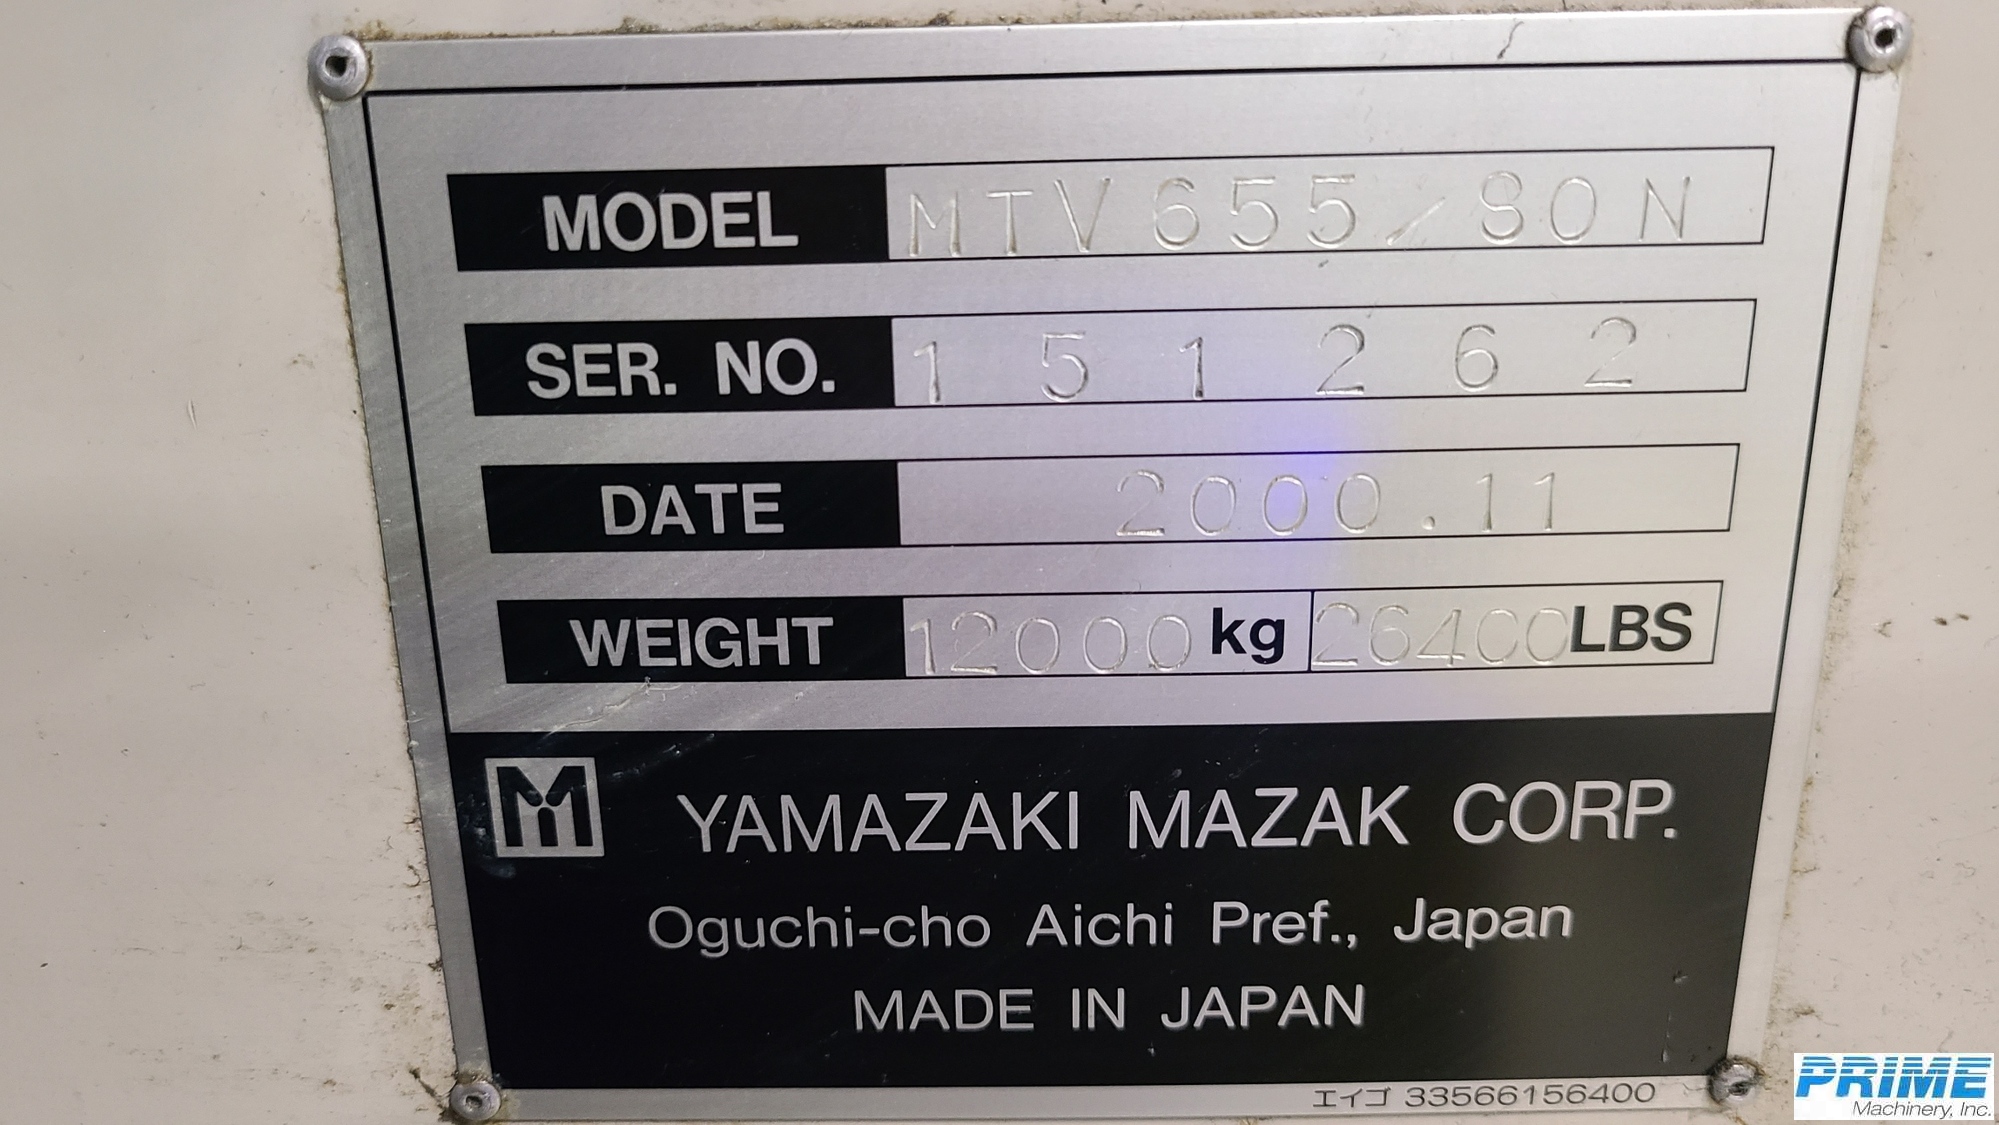 2000 MAZAK MTV-655/80N MACHINING CENTERS, VERT., N/C & CNC | Prime Machinery